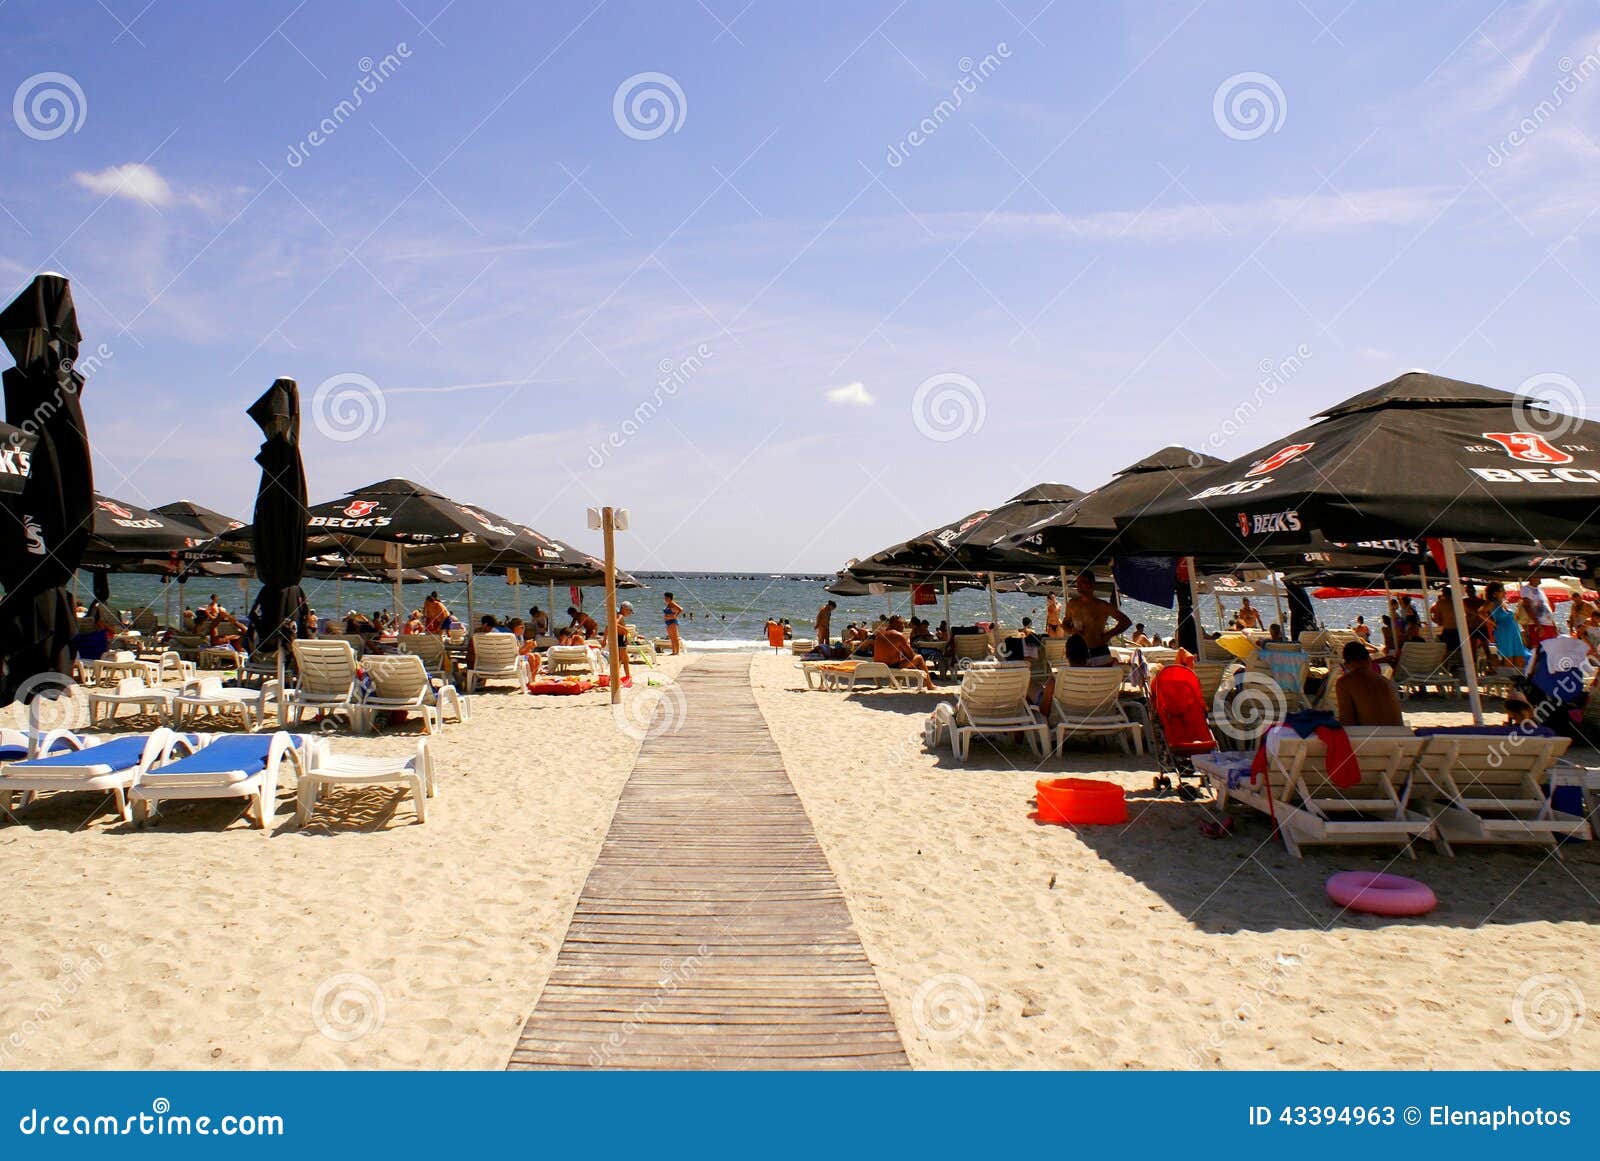 Mamaia Beach At The Black Sea Editorial Stock Photo Image Of Horizon Object